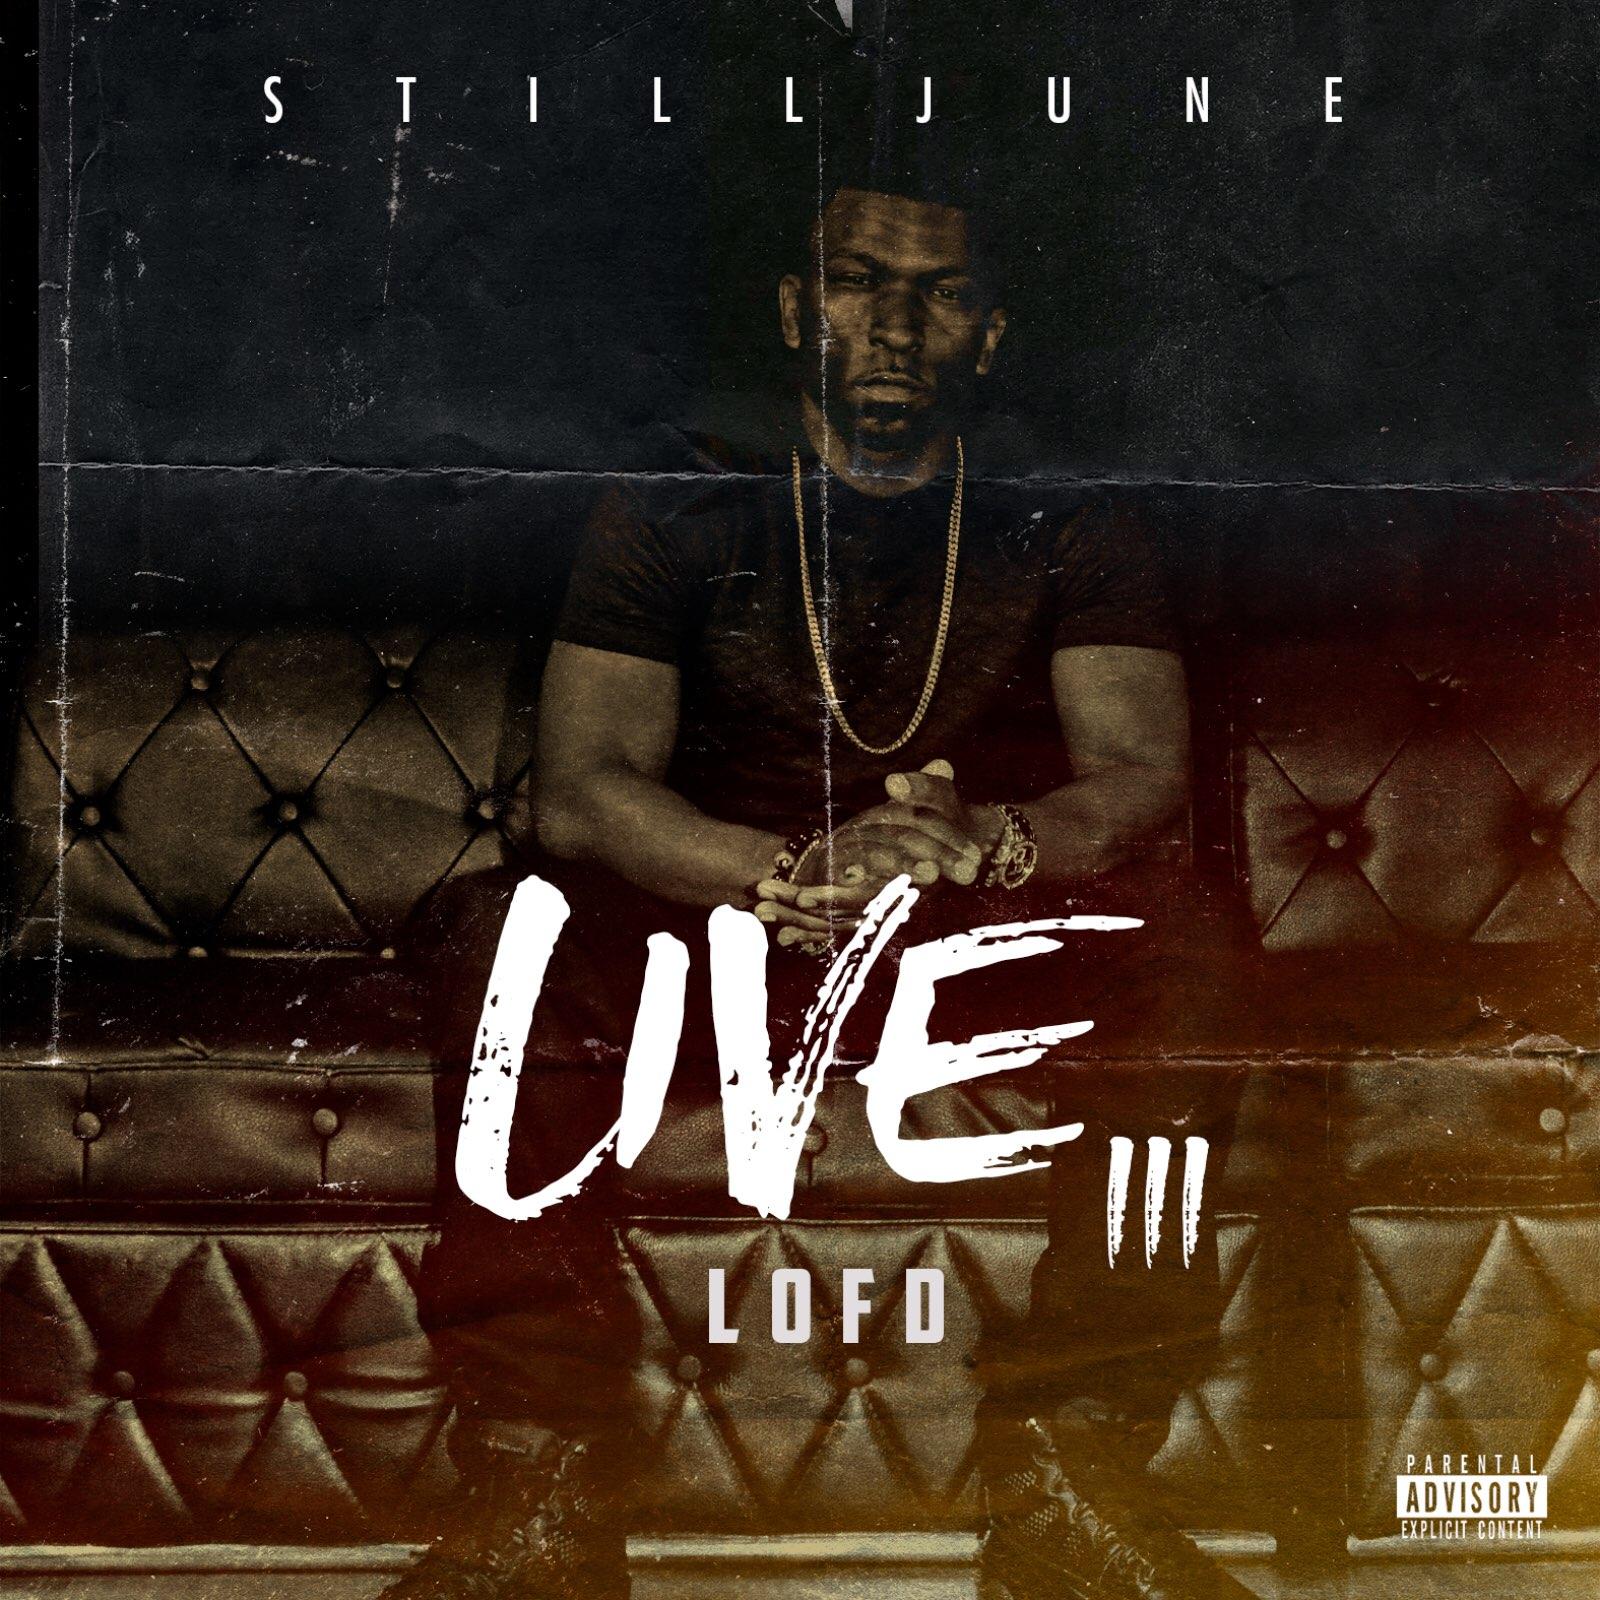 Stilljune – Live III LOFD